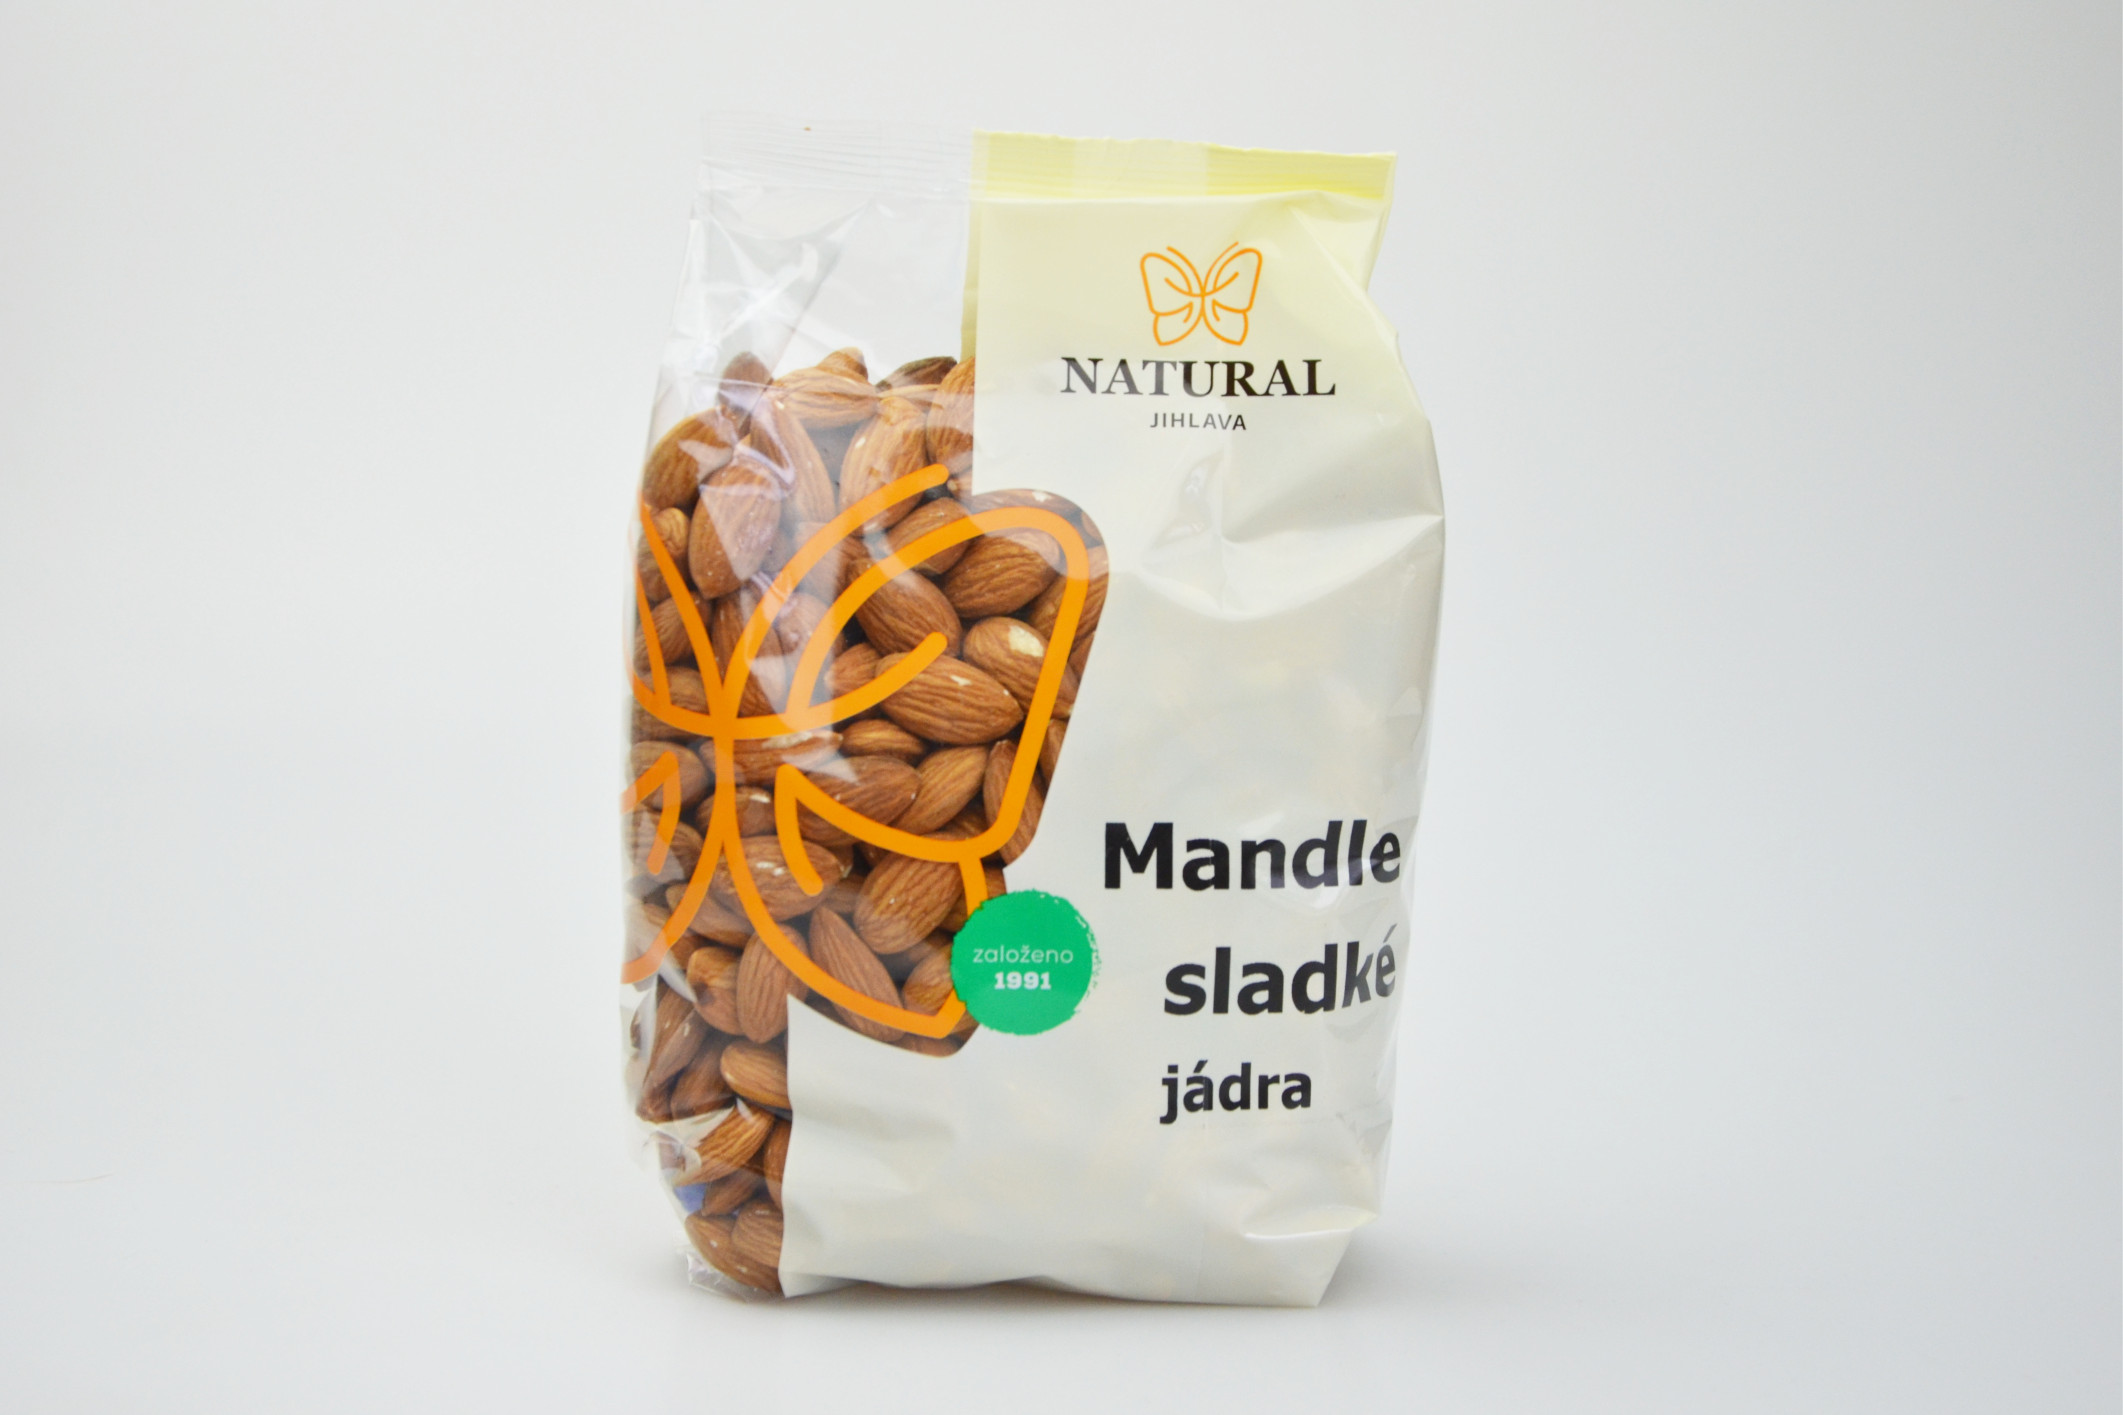 Natural Jihlava Mandle sladké - jádra - neloupané Natural 500g